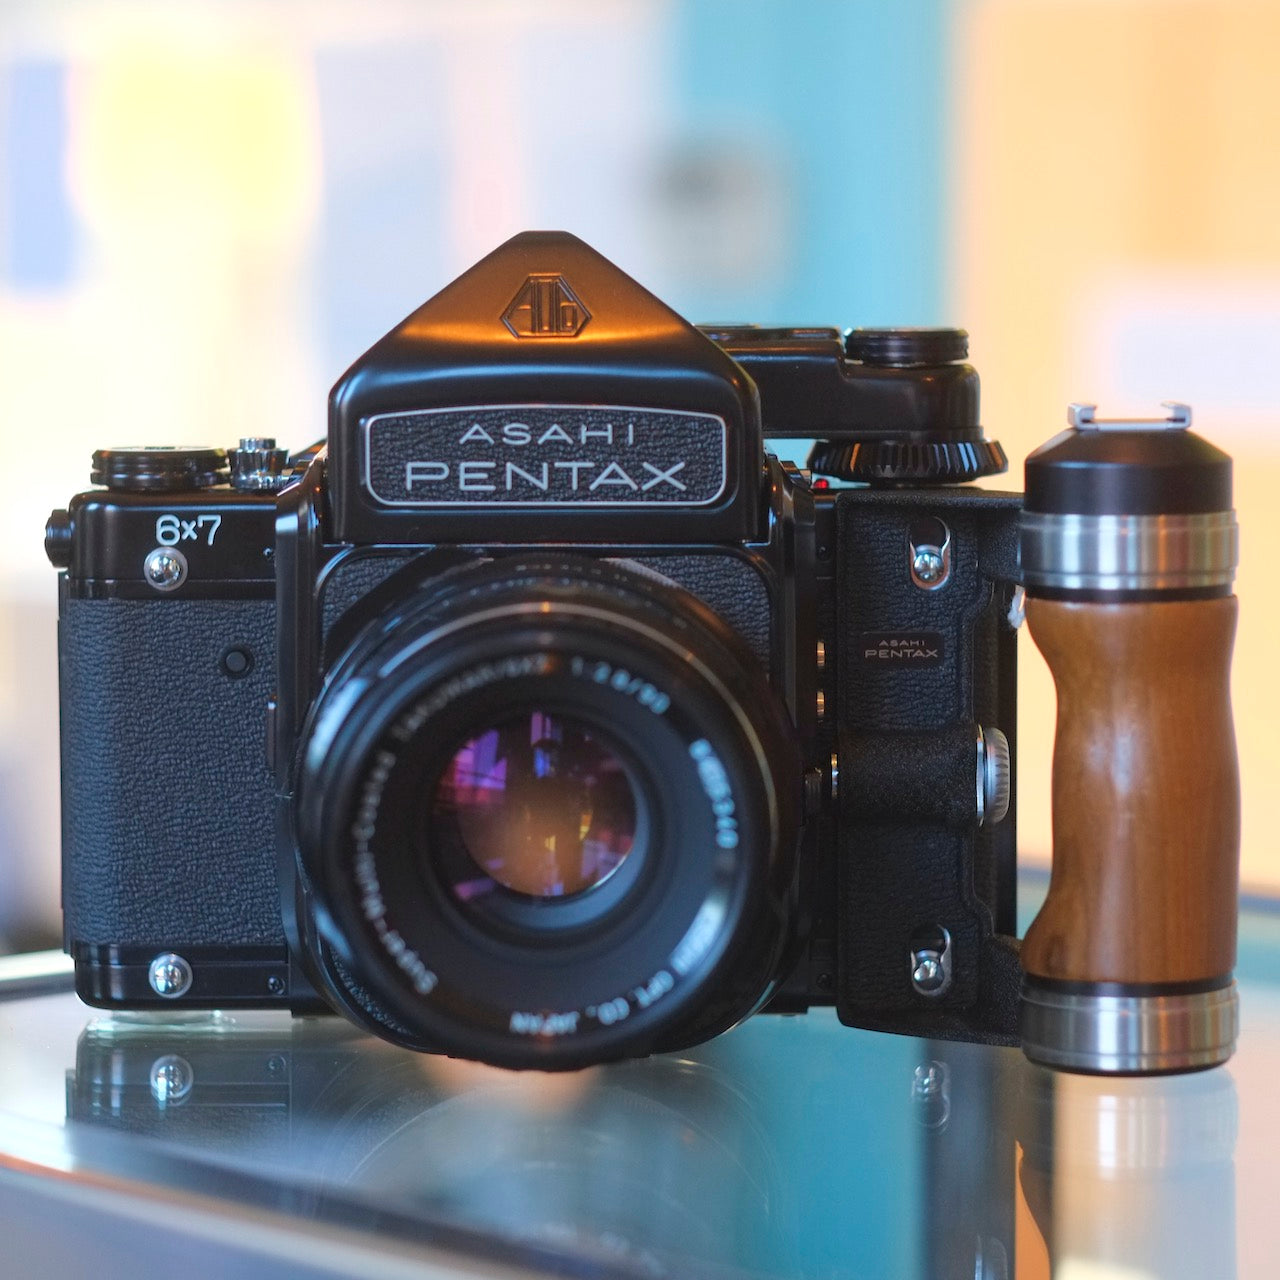 Pentax 6x7 with 90mm f2.8 Leaf Shutter lens